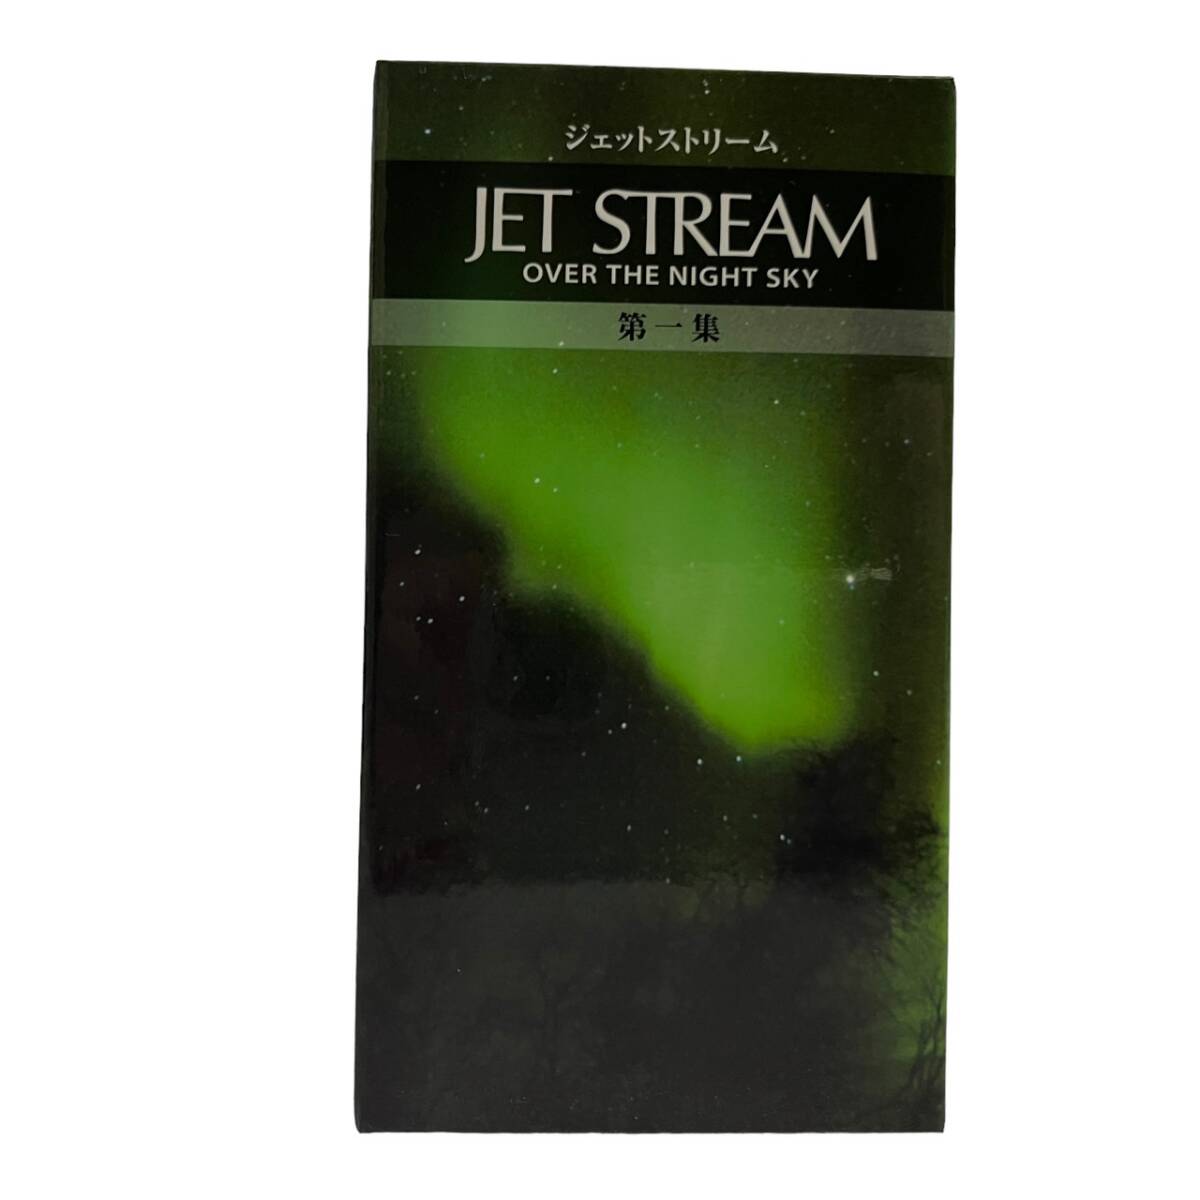 A70 061 * jet Stream no. 1 сборник Over The Night Sky CD все 7 шт *